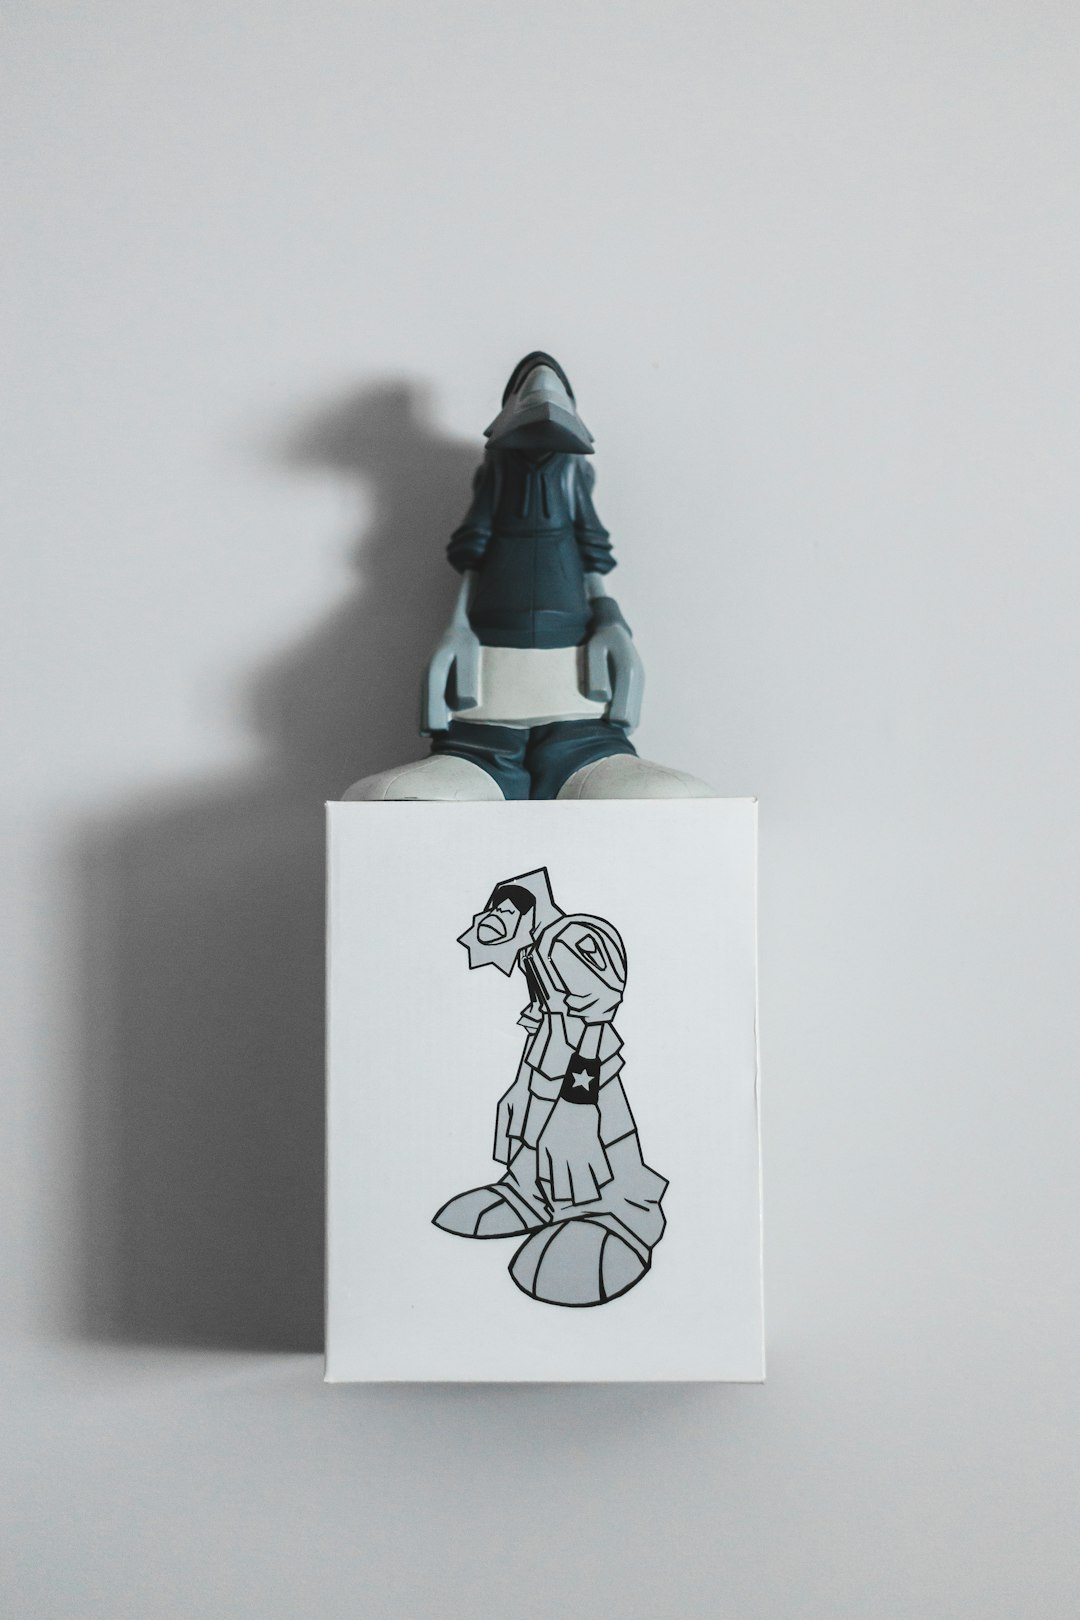 man figurine on box